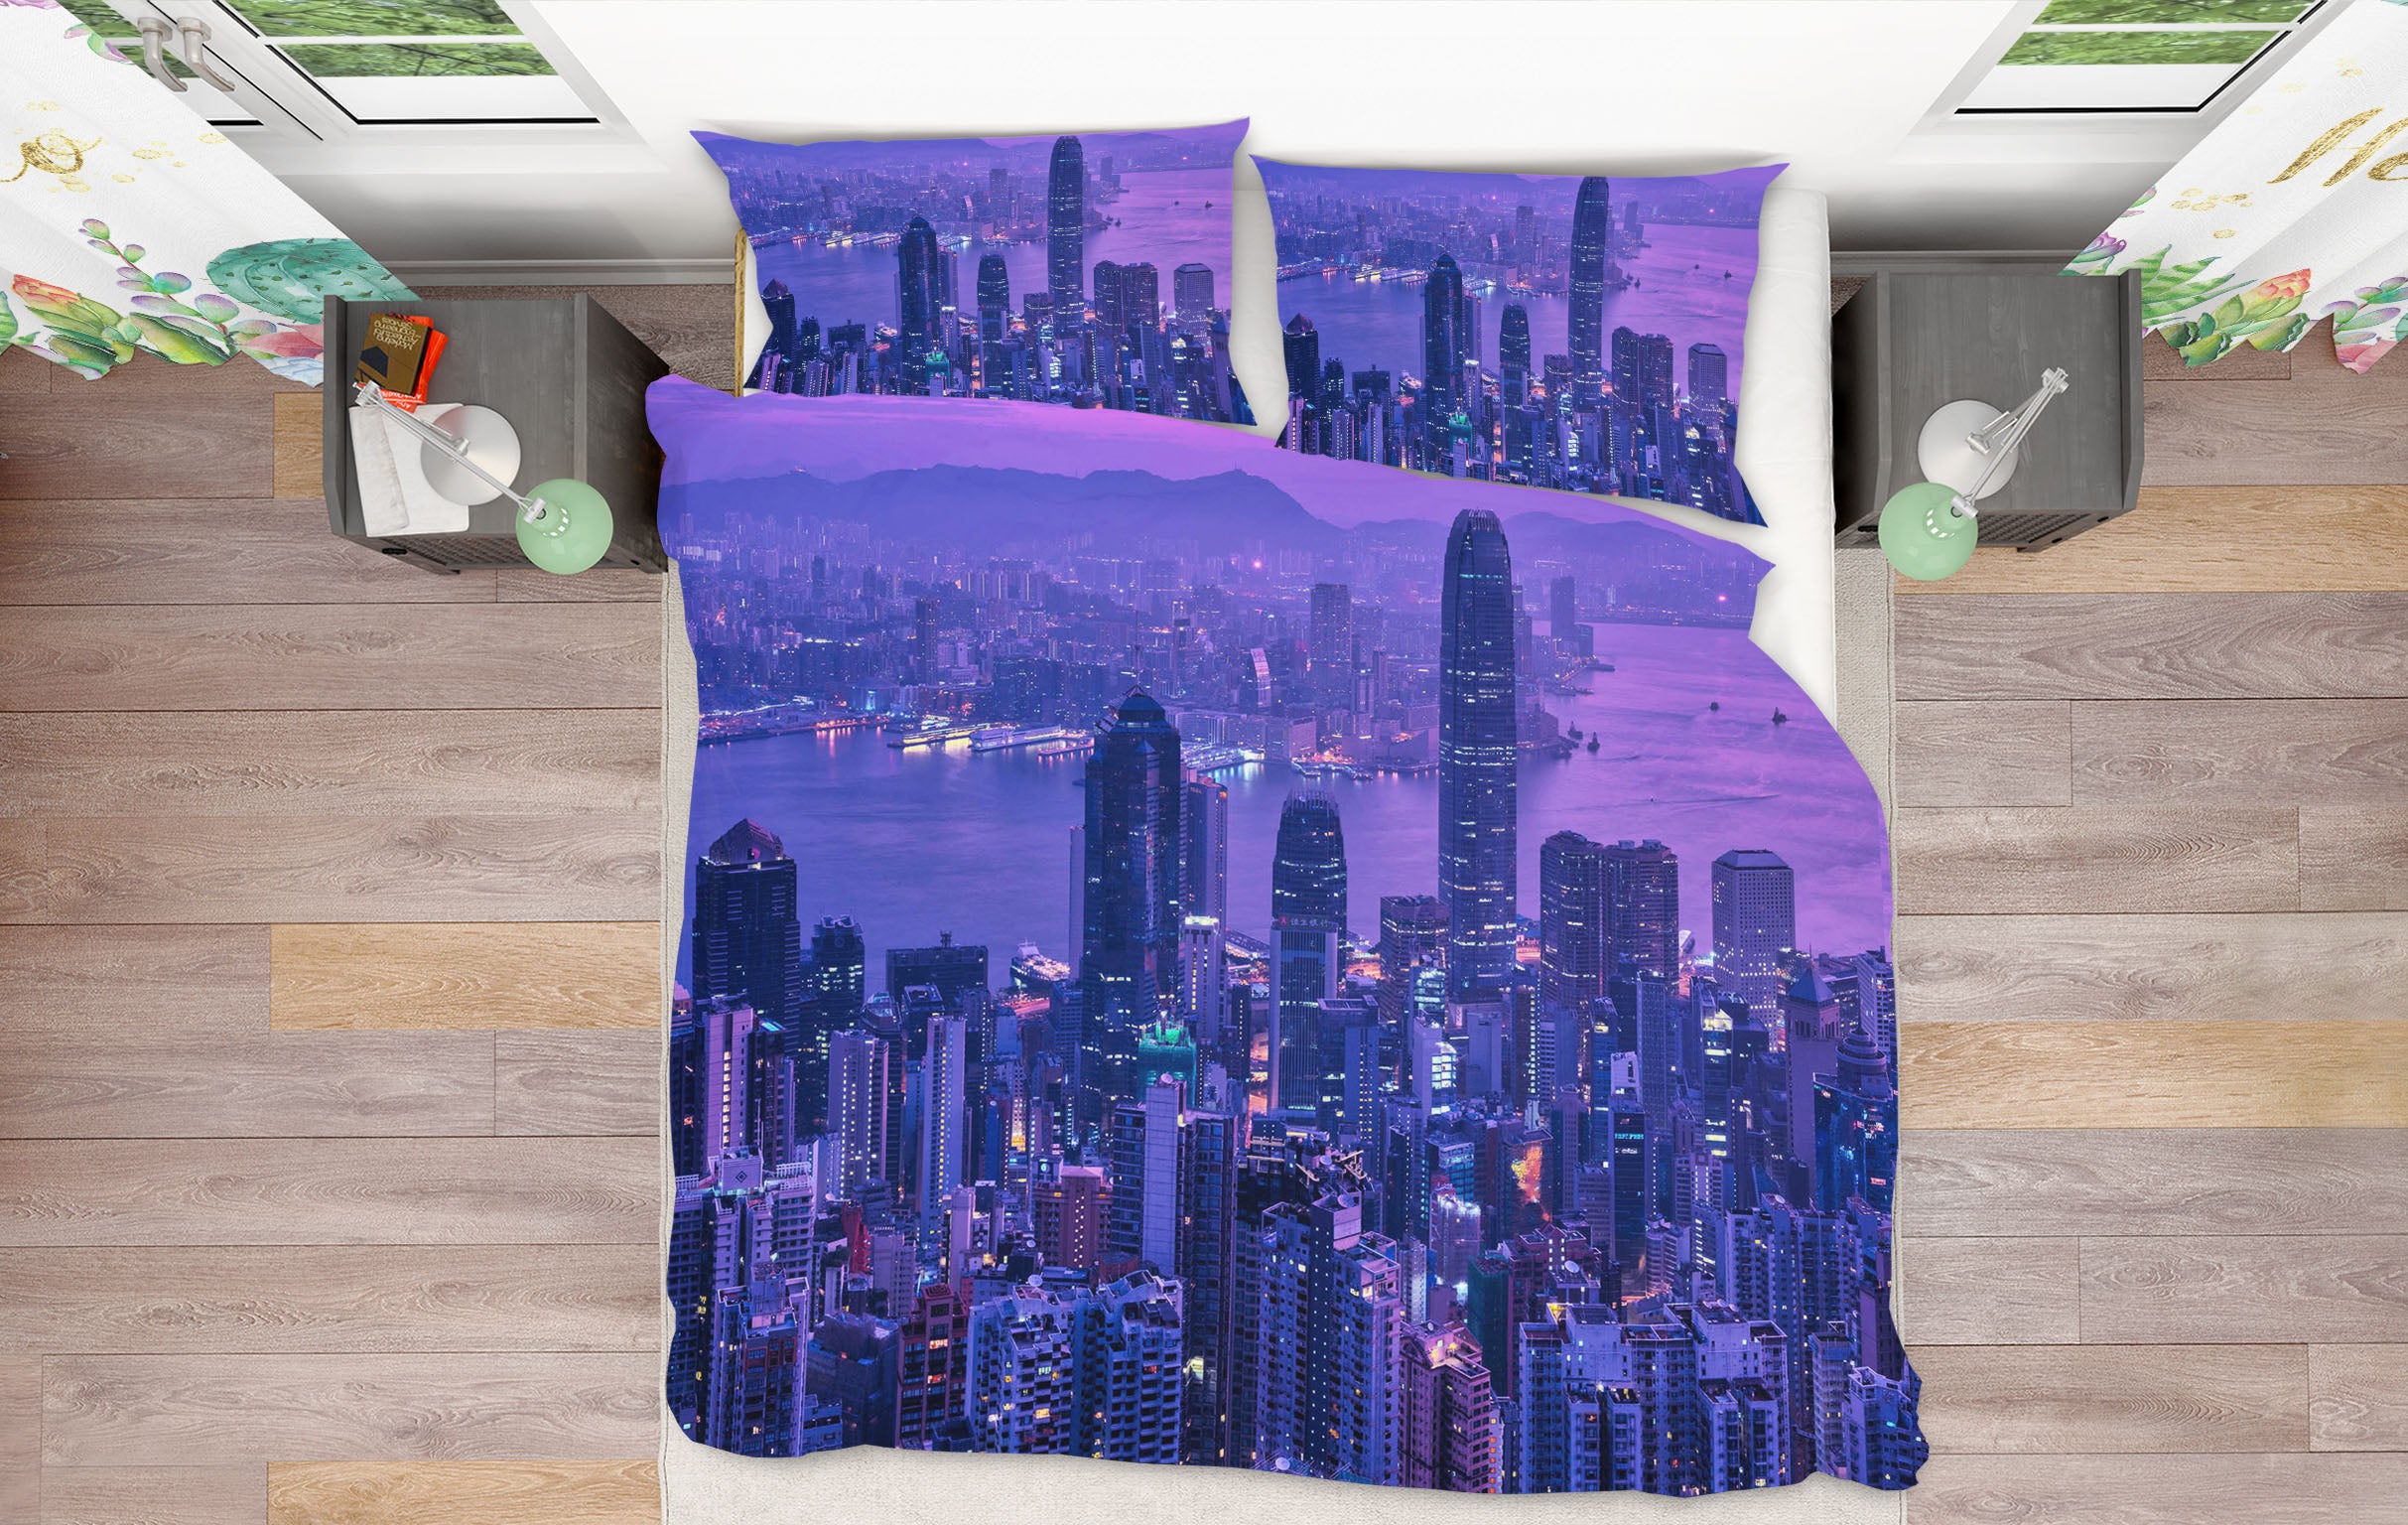 3D Hazy City 2119 Marco Carmassi Bedding Bed Pillowcases Quilt